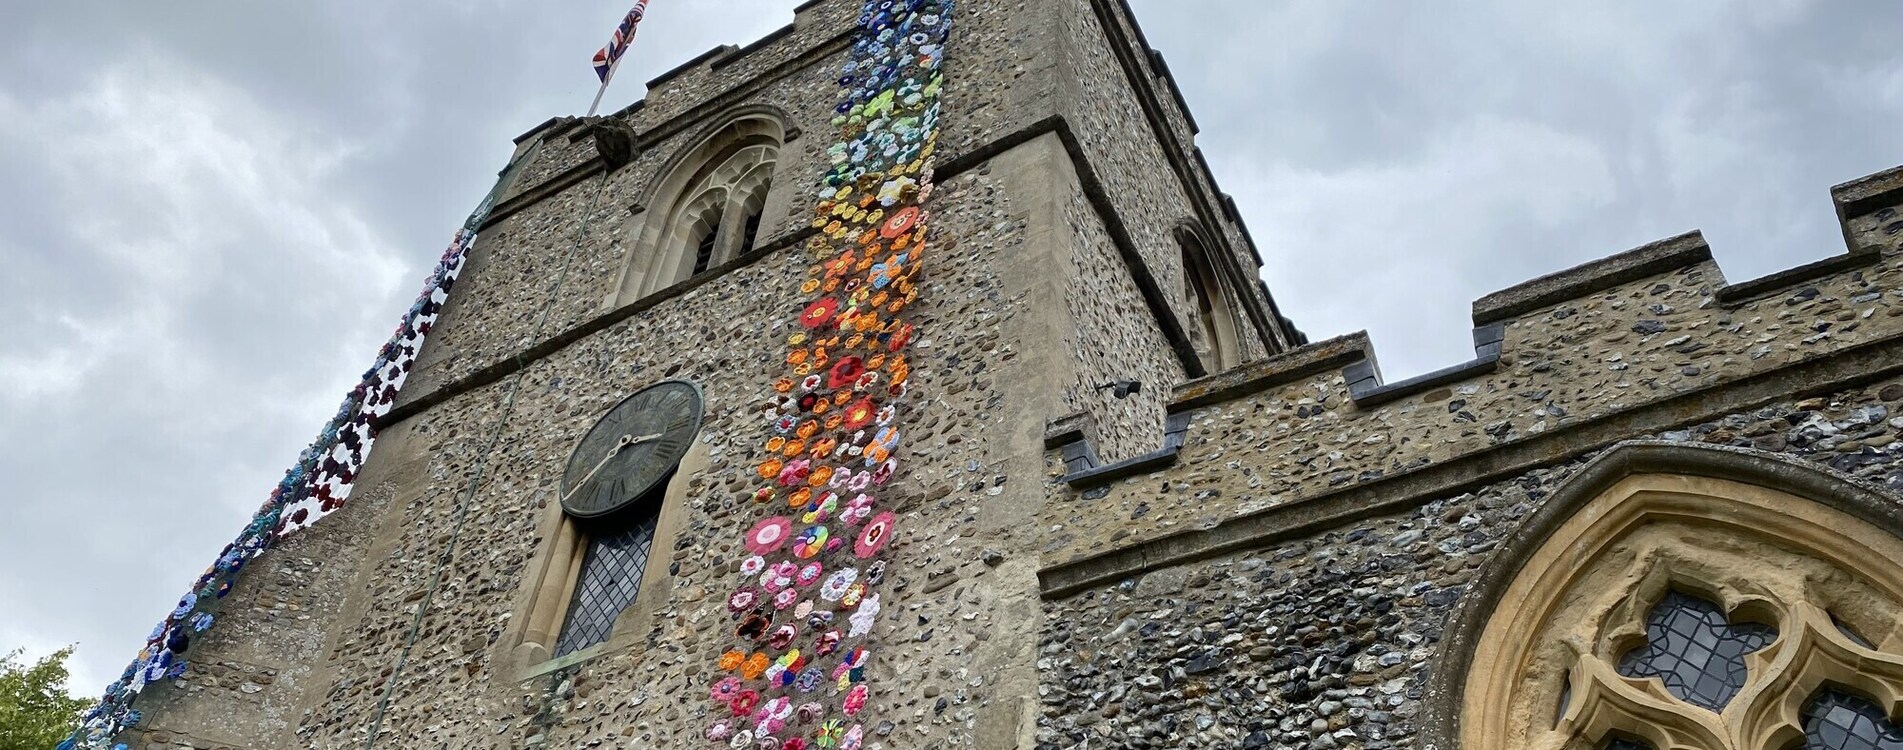 barley-church-flower-tower (cropped)